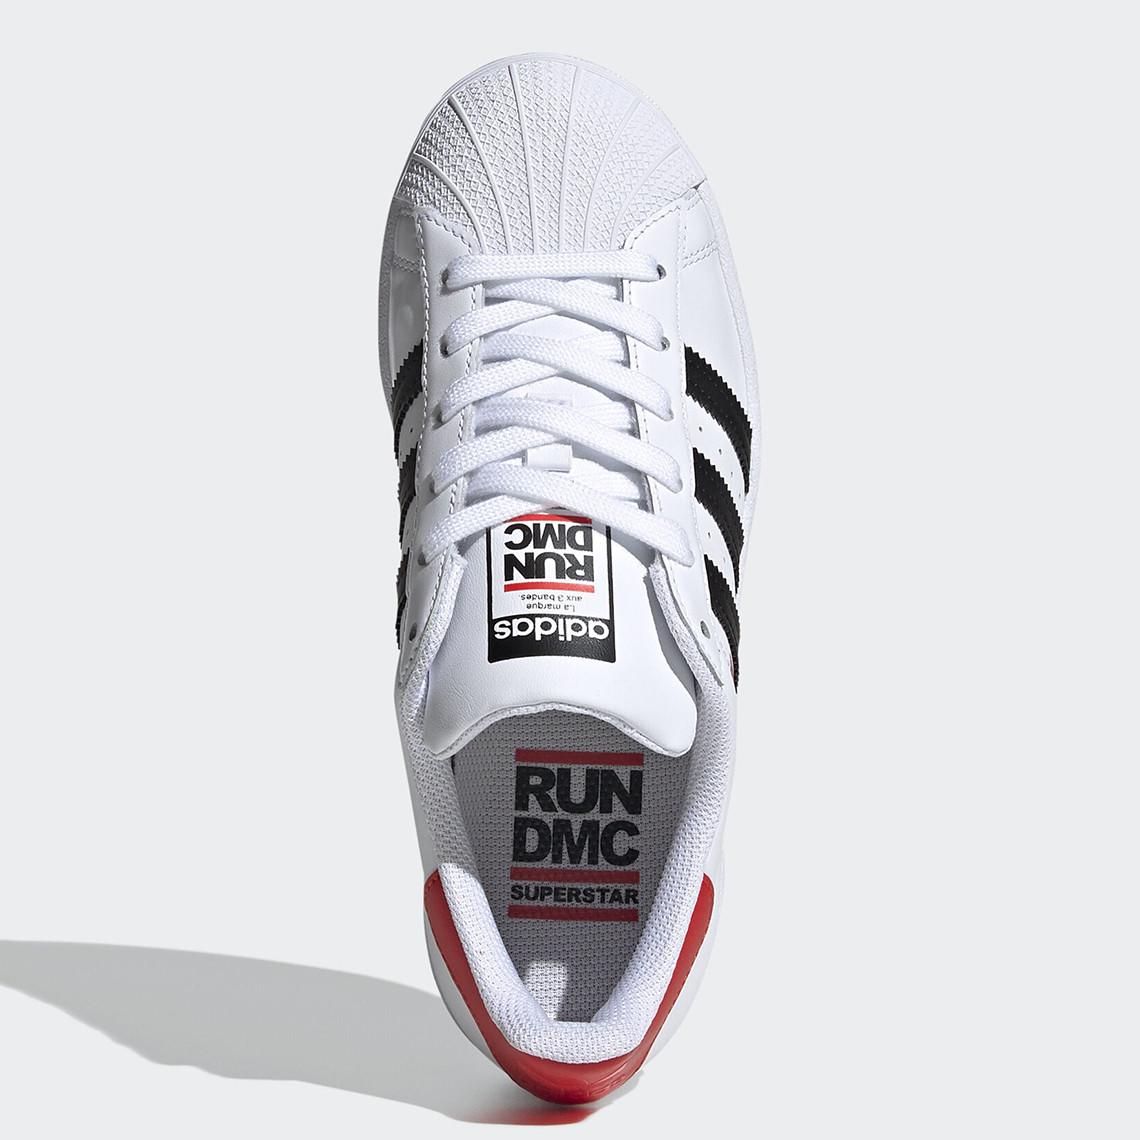 run dmc adidas superstar shoes